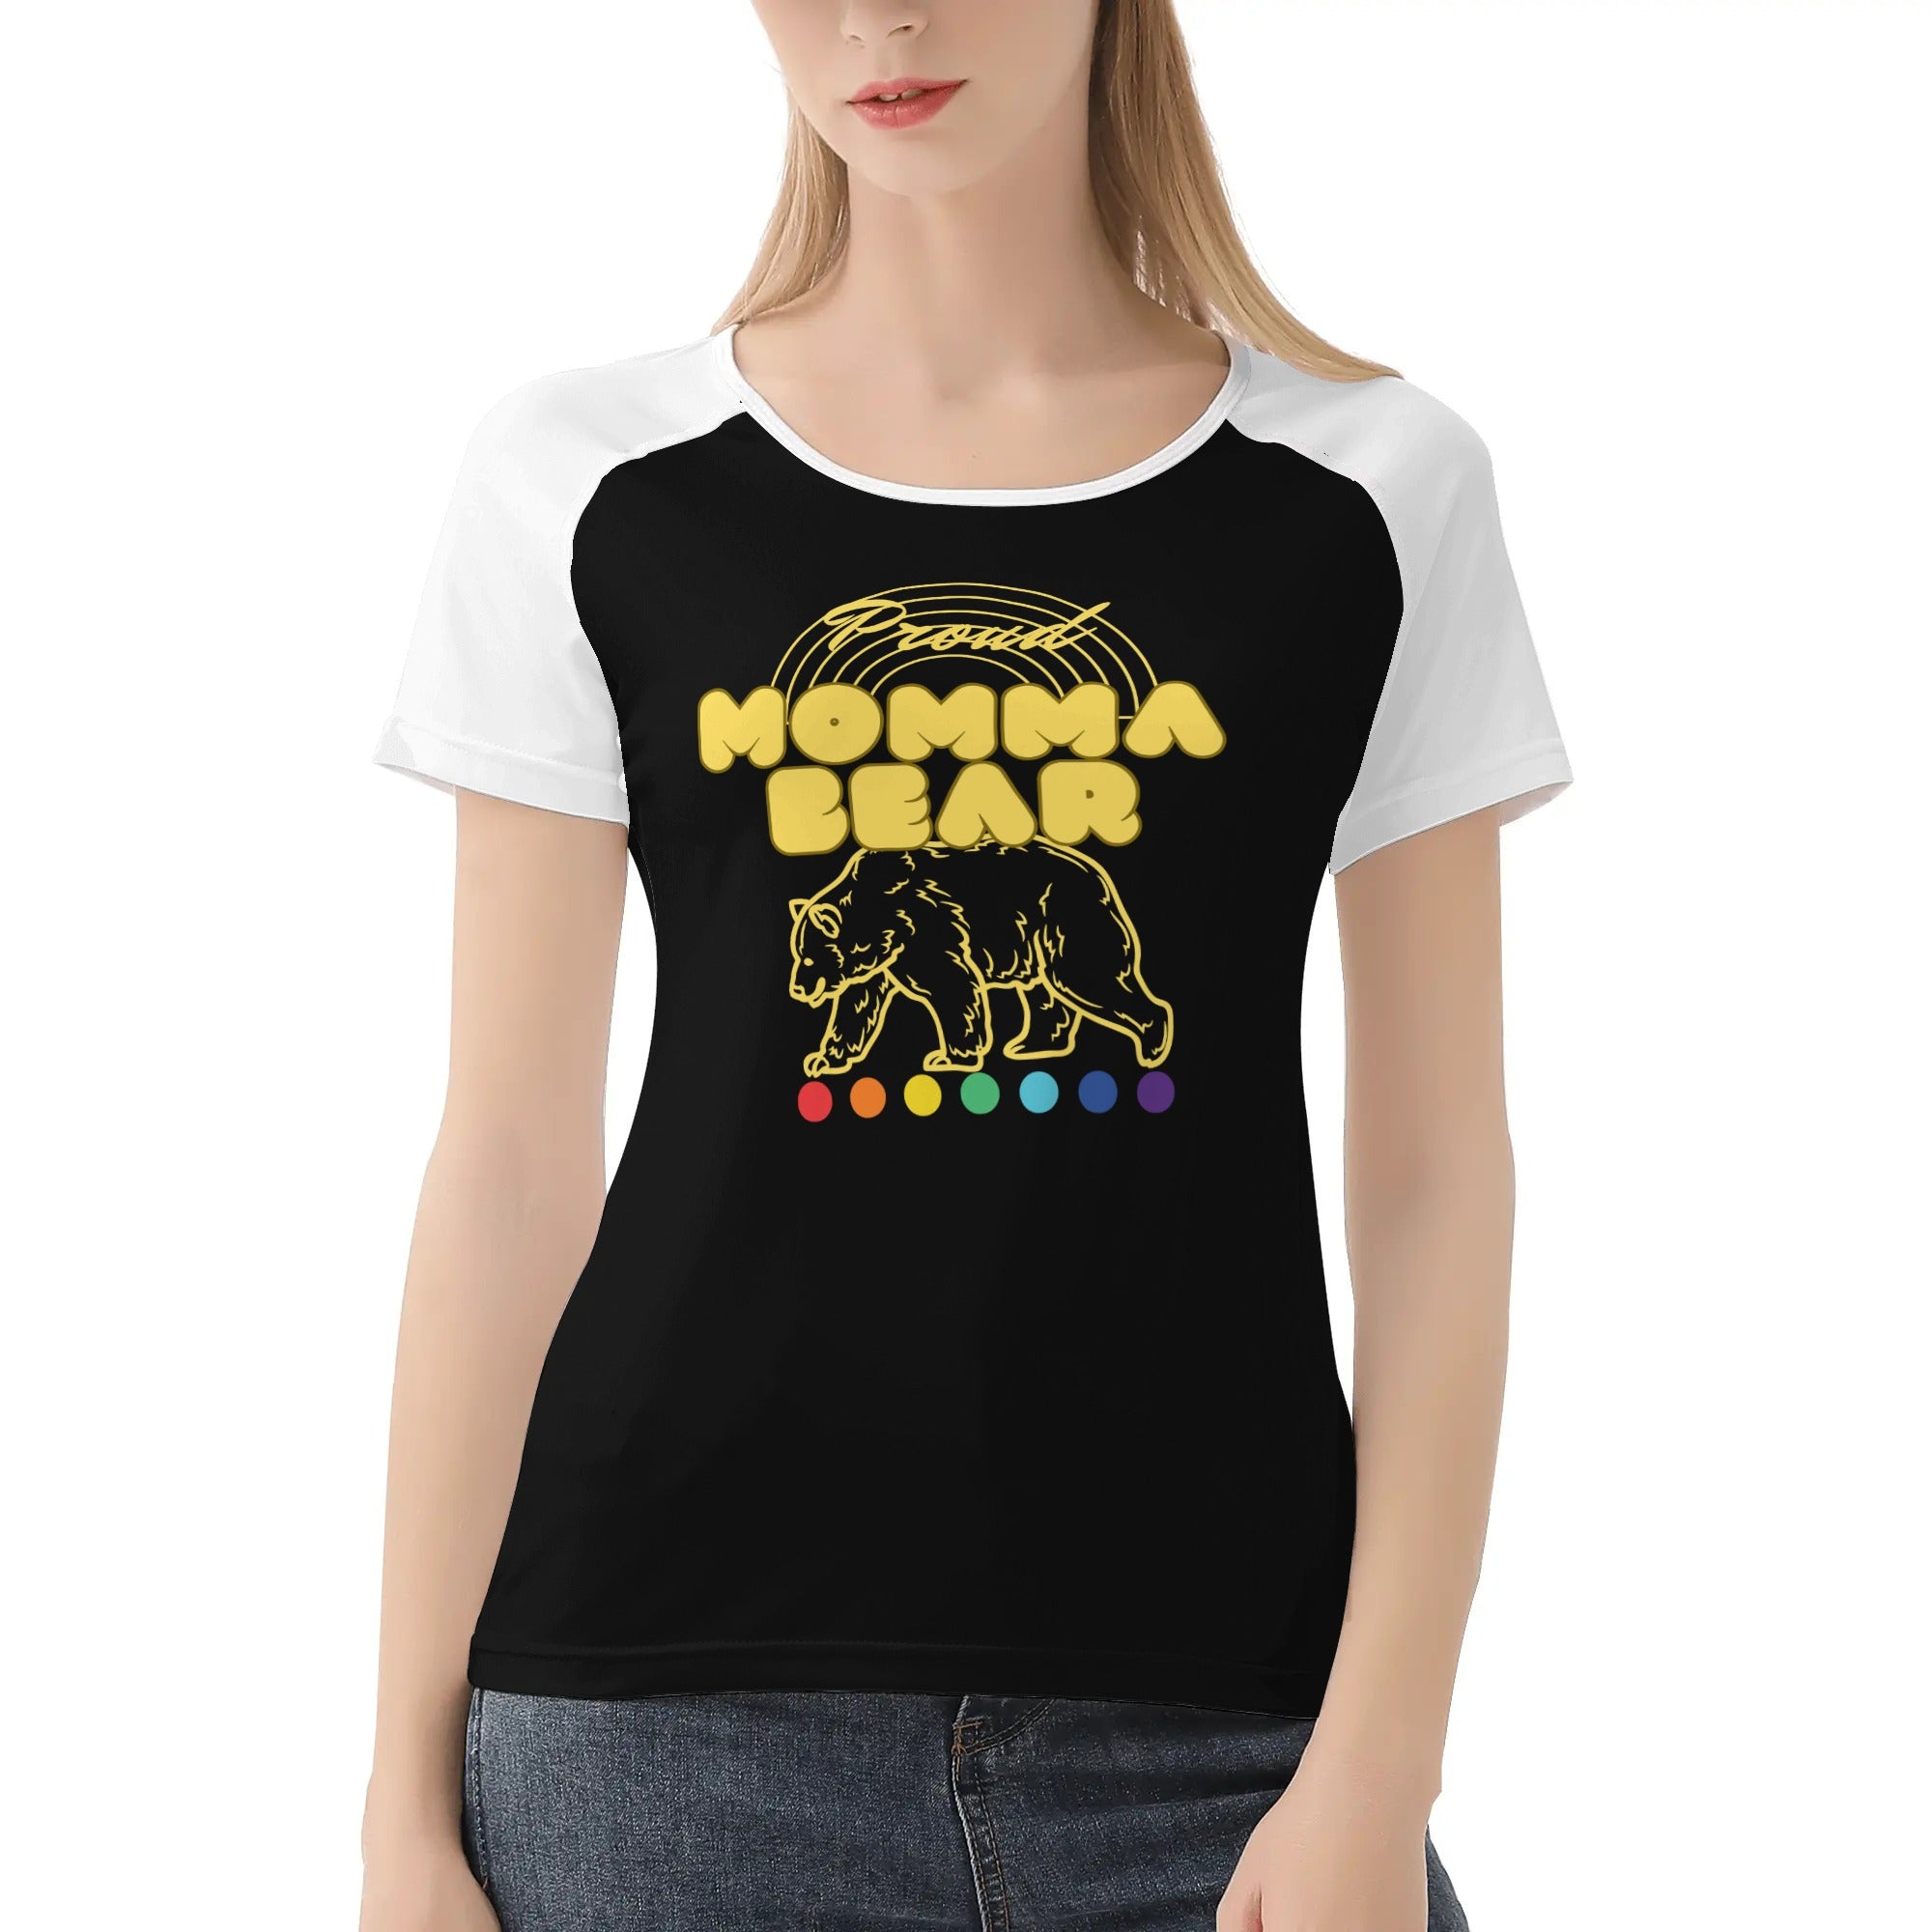 Proud Momma bear Women's Baseball T-shirt